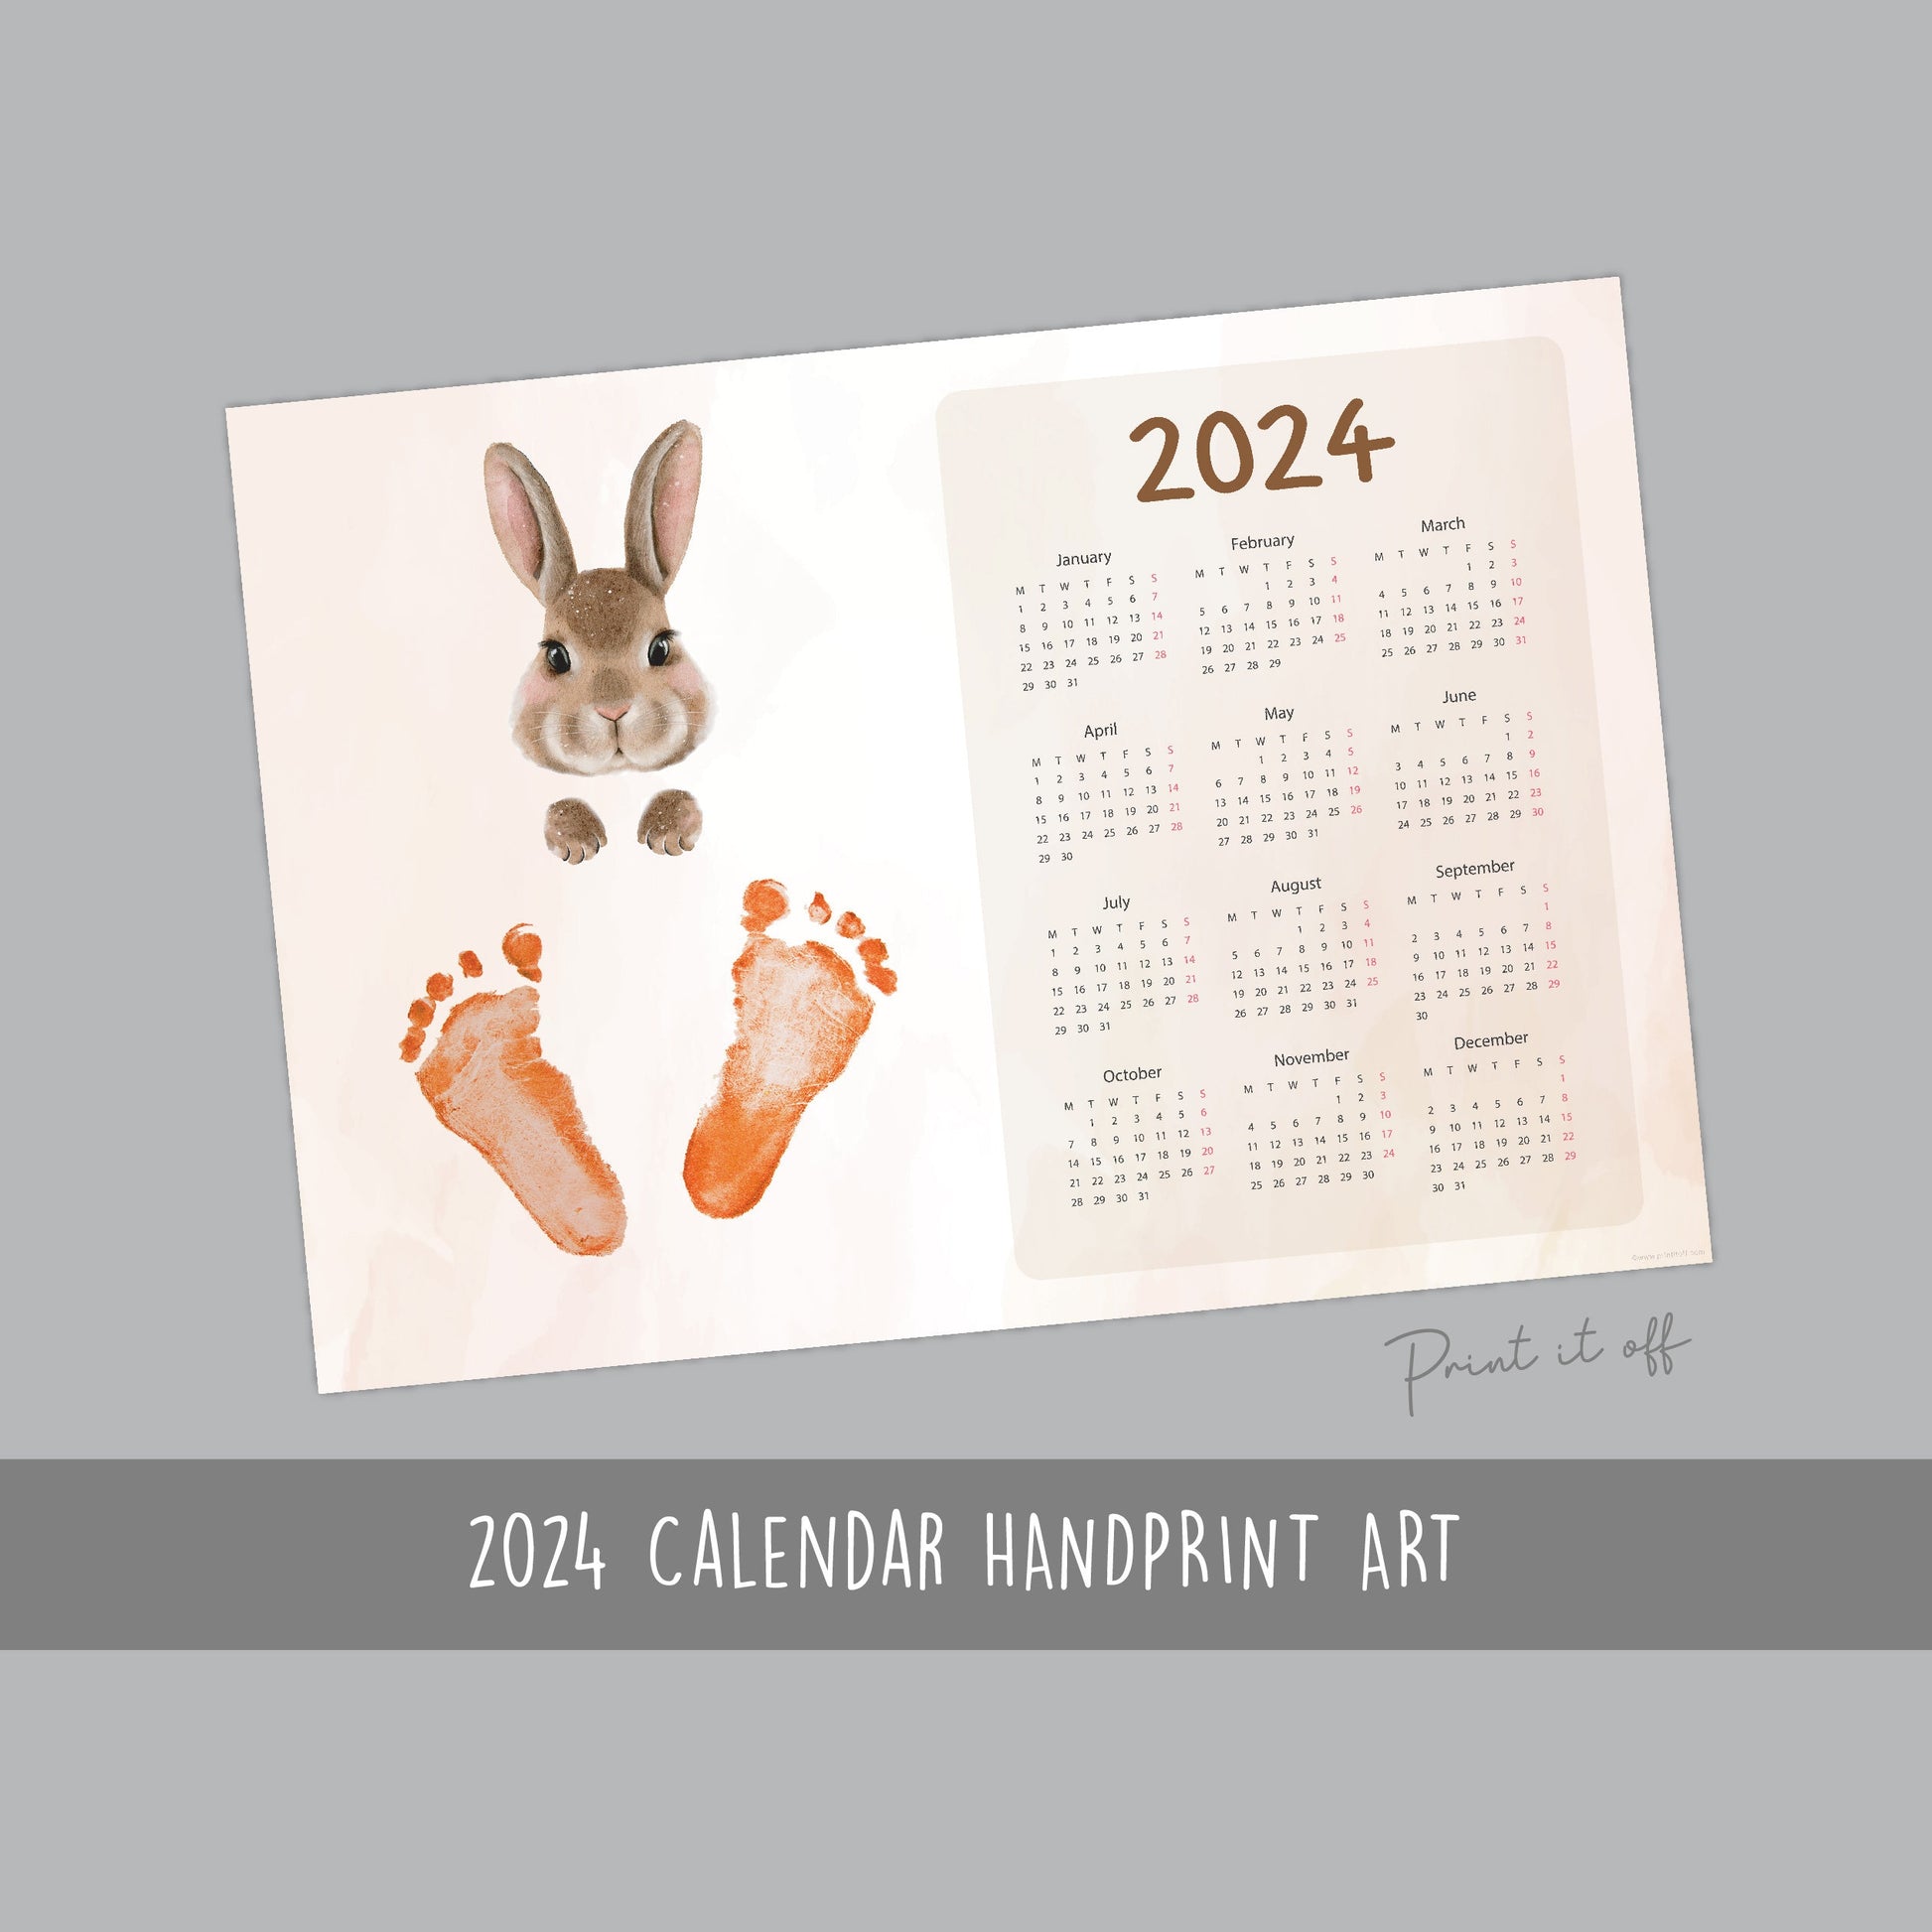 2024 Bunny Calendar Year / Handprint Footprint Art Craft / Activity DIY Gift Keepsake / Baby Kids Child Toddler / Print It Off